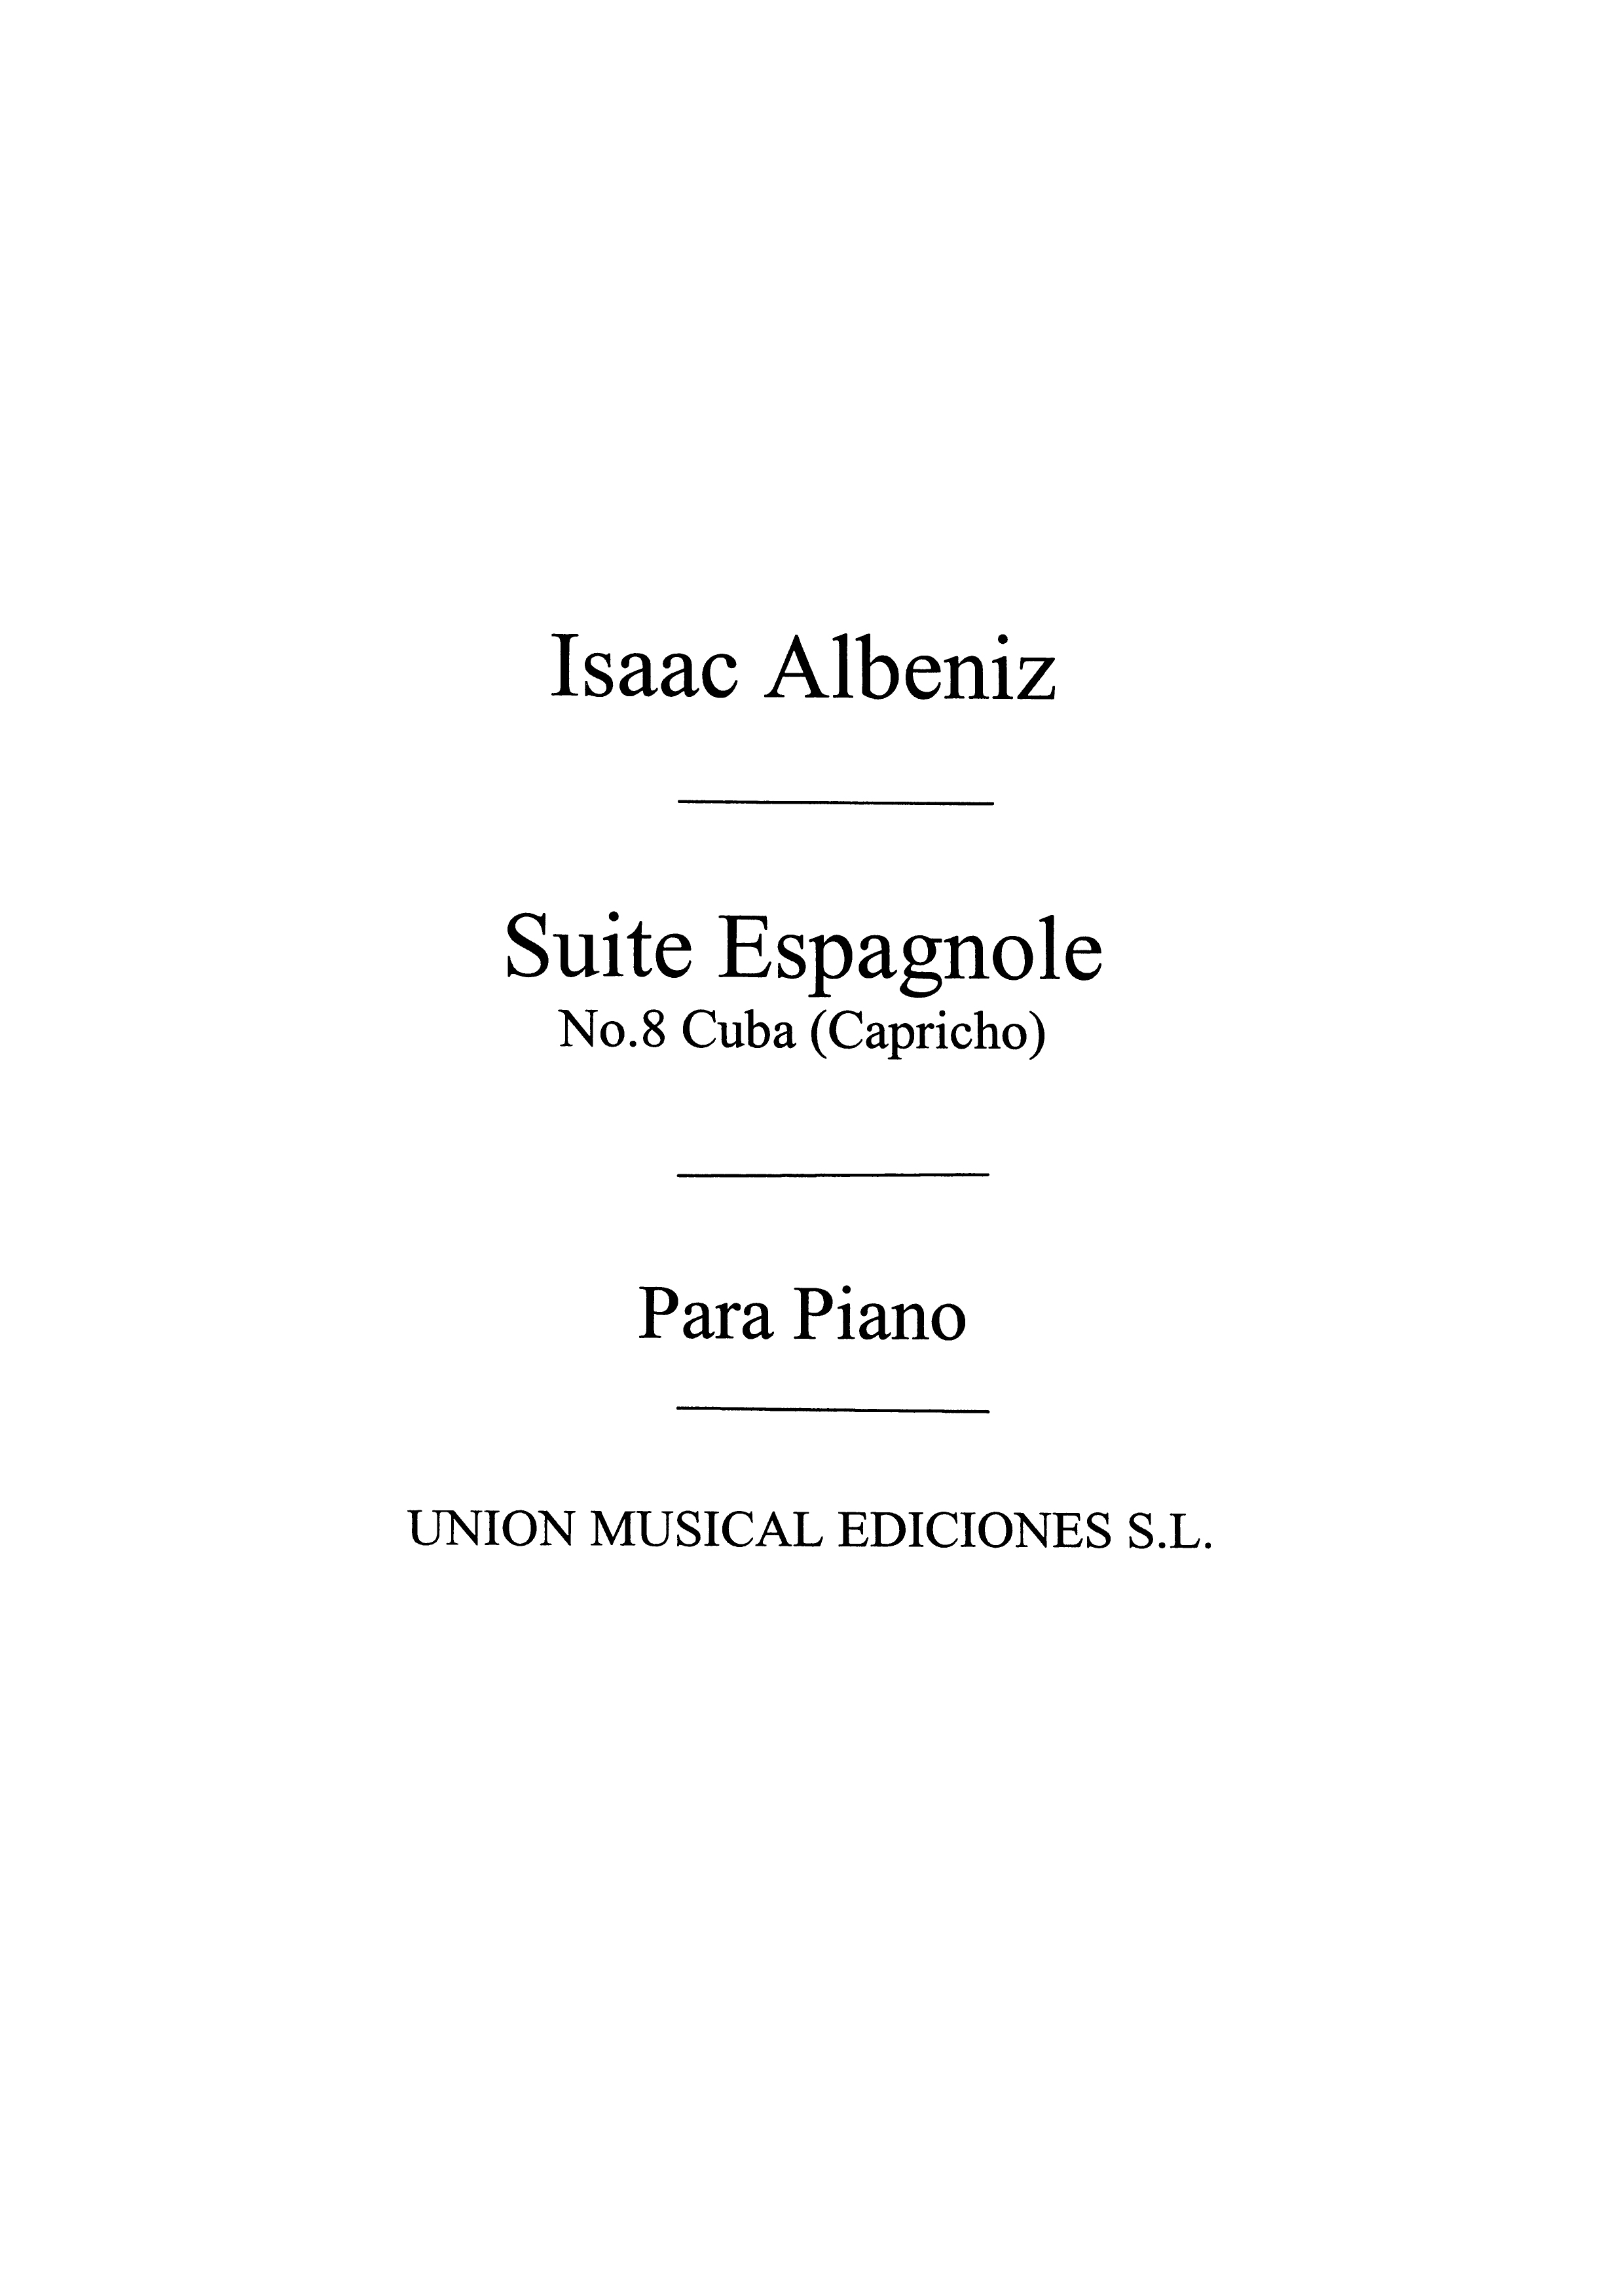 Isaac Albniz: Capricho No.8 From Suite Espanola Op.47: Piano: Instrumental Work